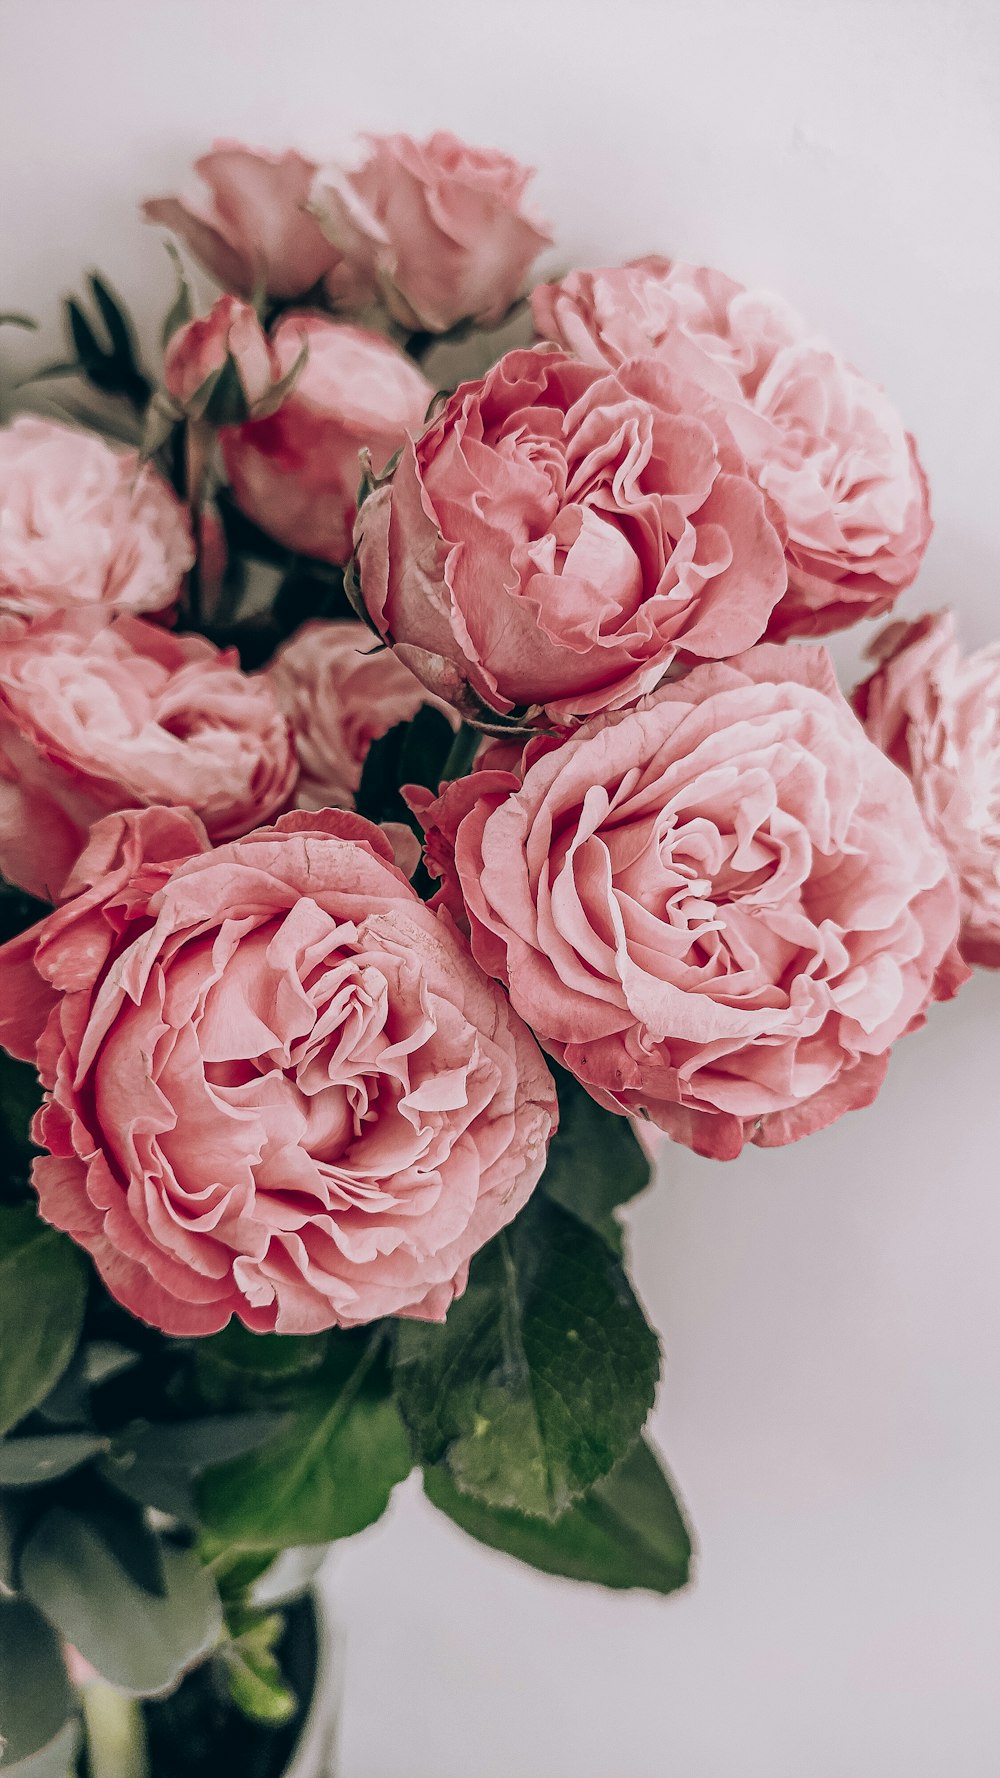 100+ Rose Flower Pictures | Download Free Images On Unsplash